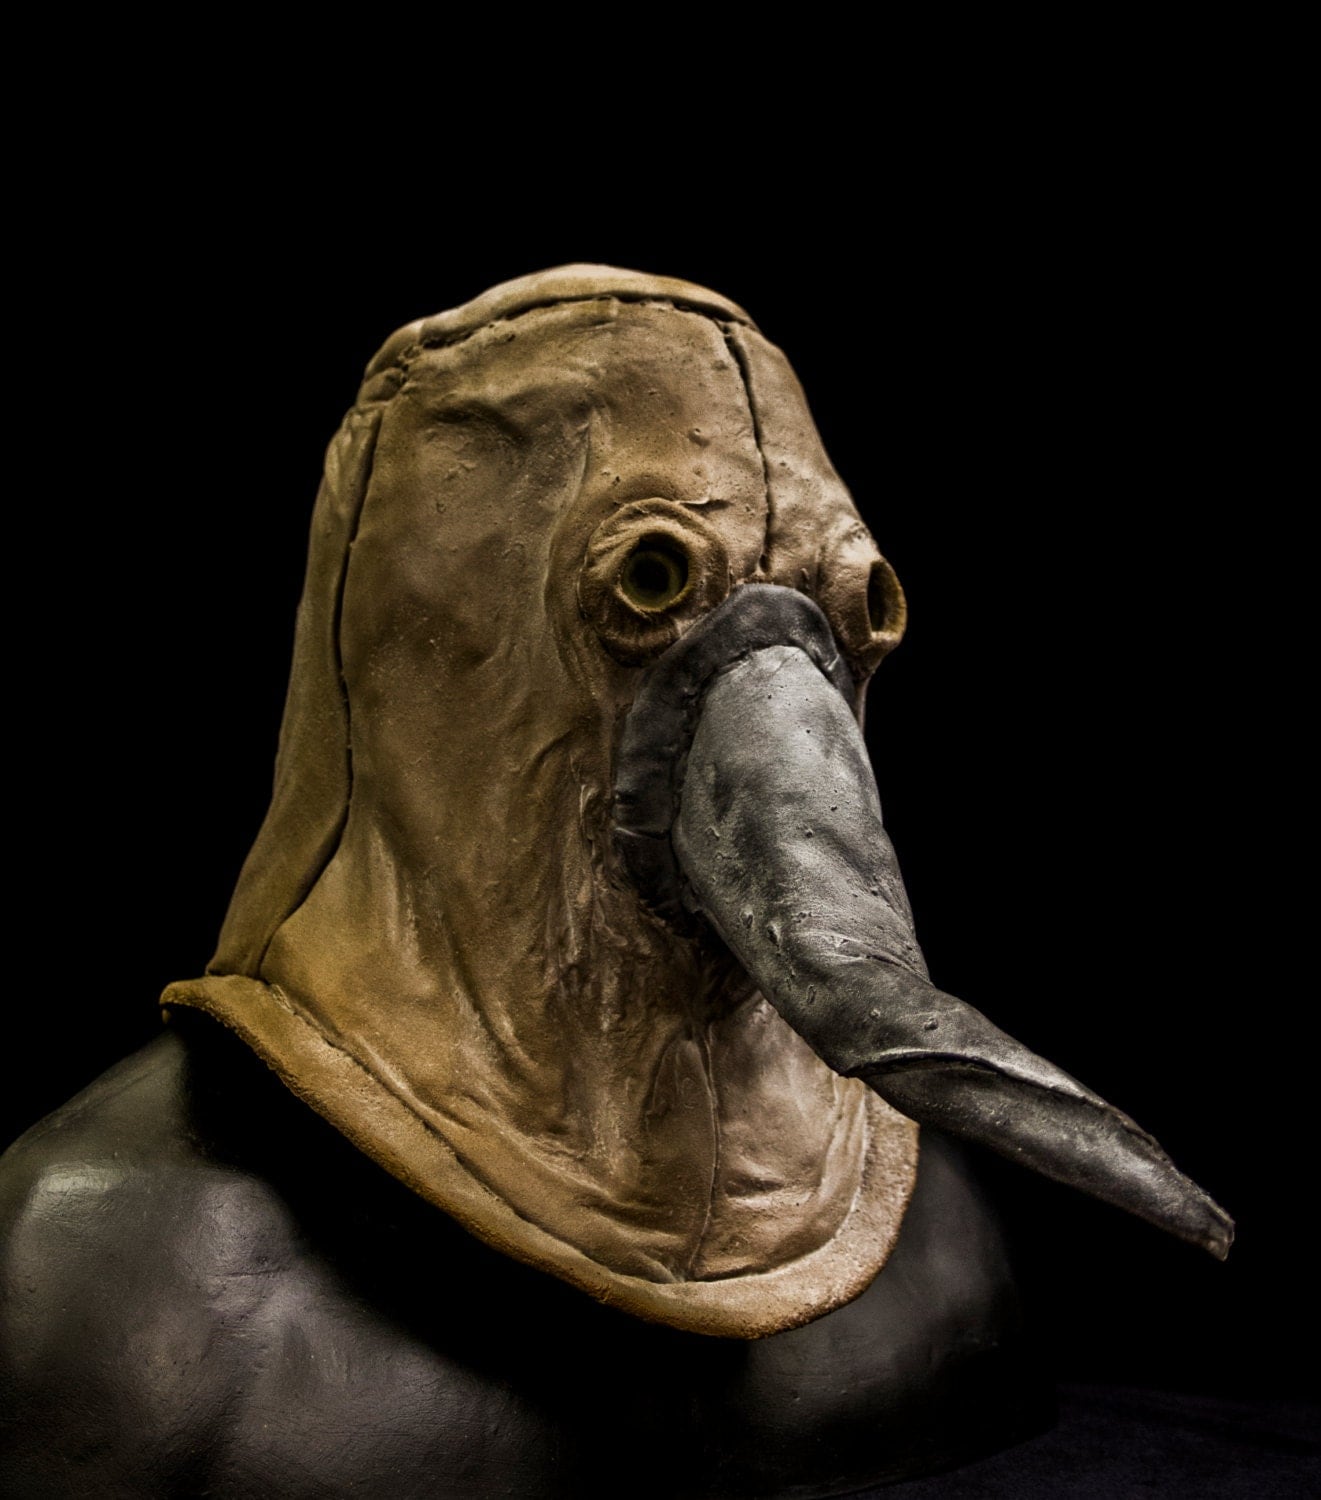 authentic plague doctor mask